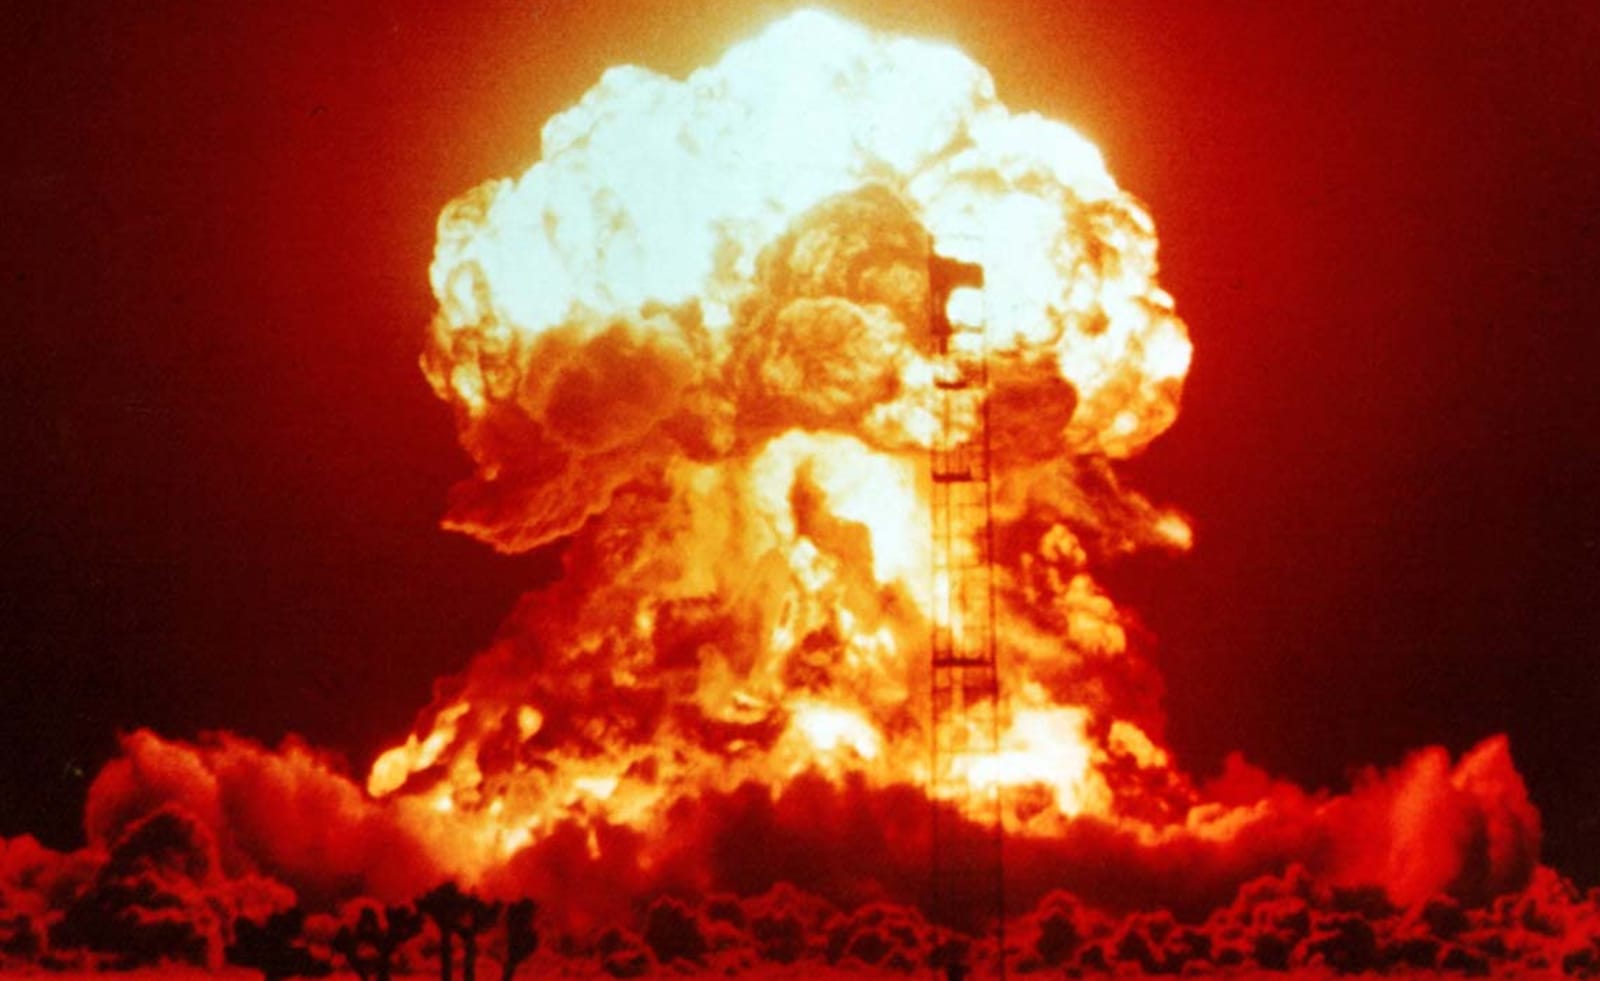 Nuclear test